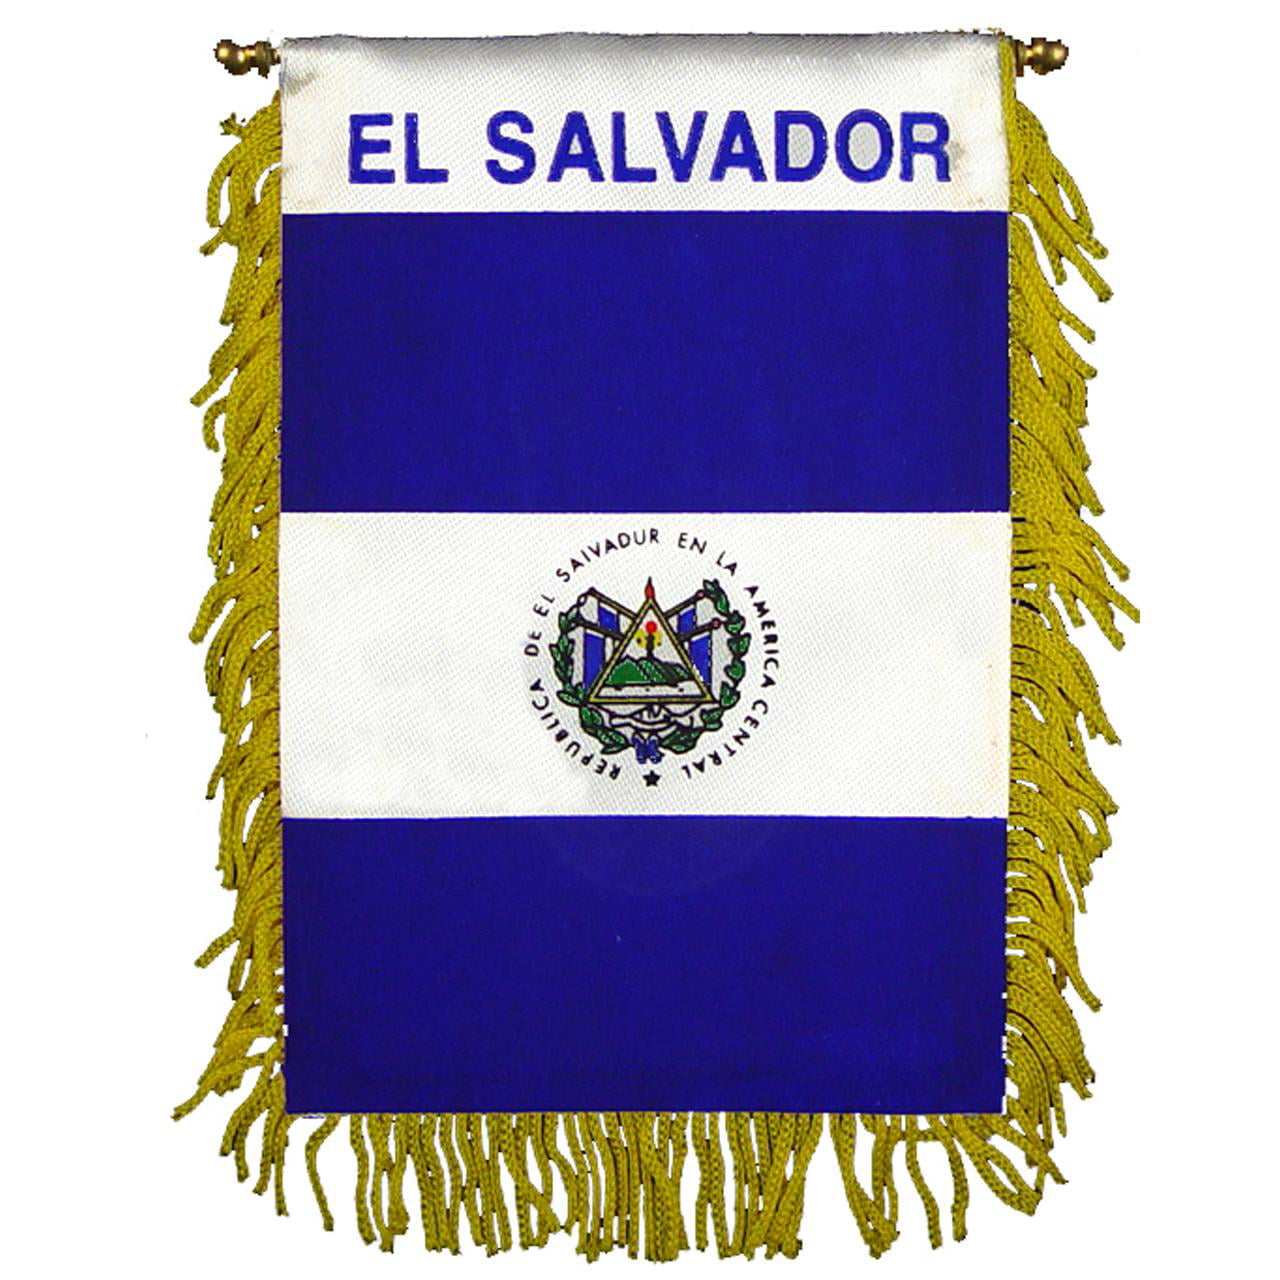 El Salvador Flag Salvadoran Hand Held Small Stick Mini Flags for Sport Parade Party Olympic Festival Decorations 1 Dozen 12 pack